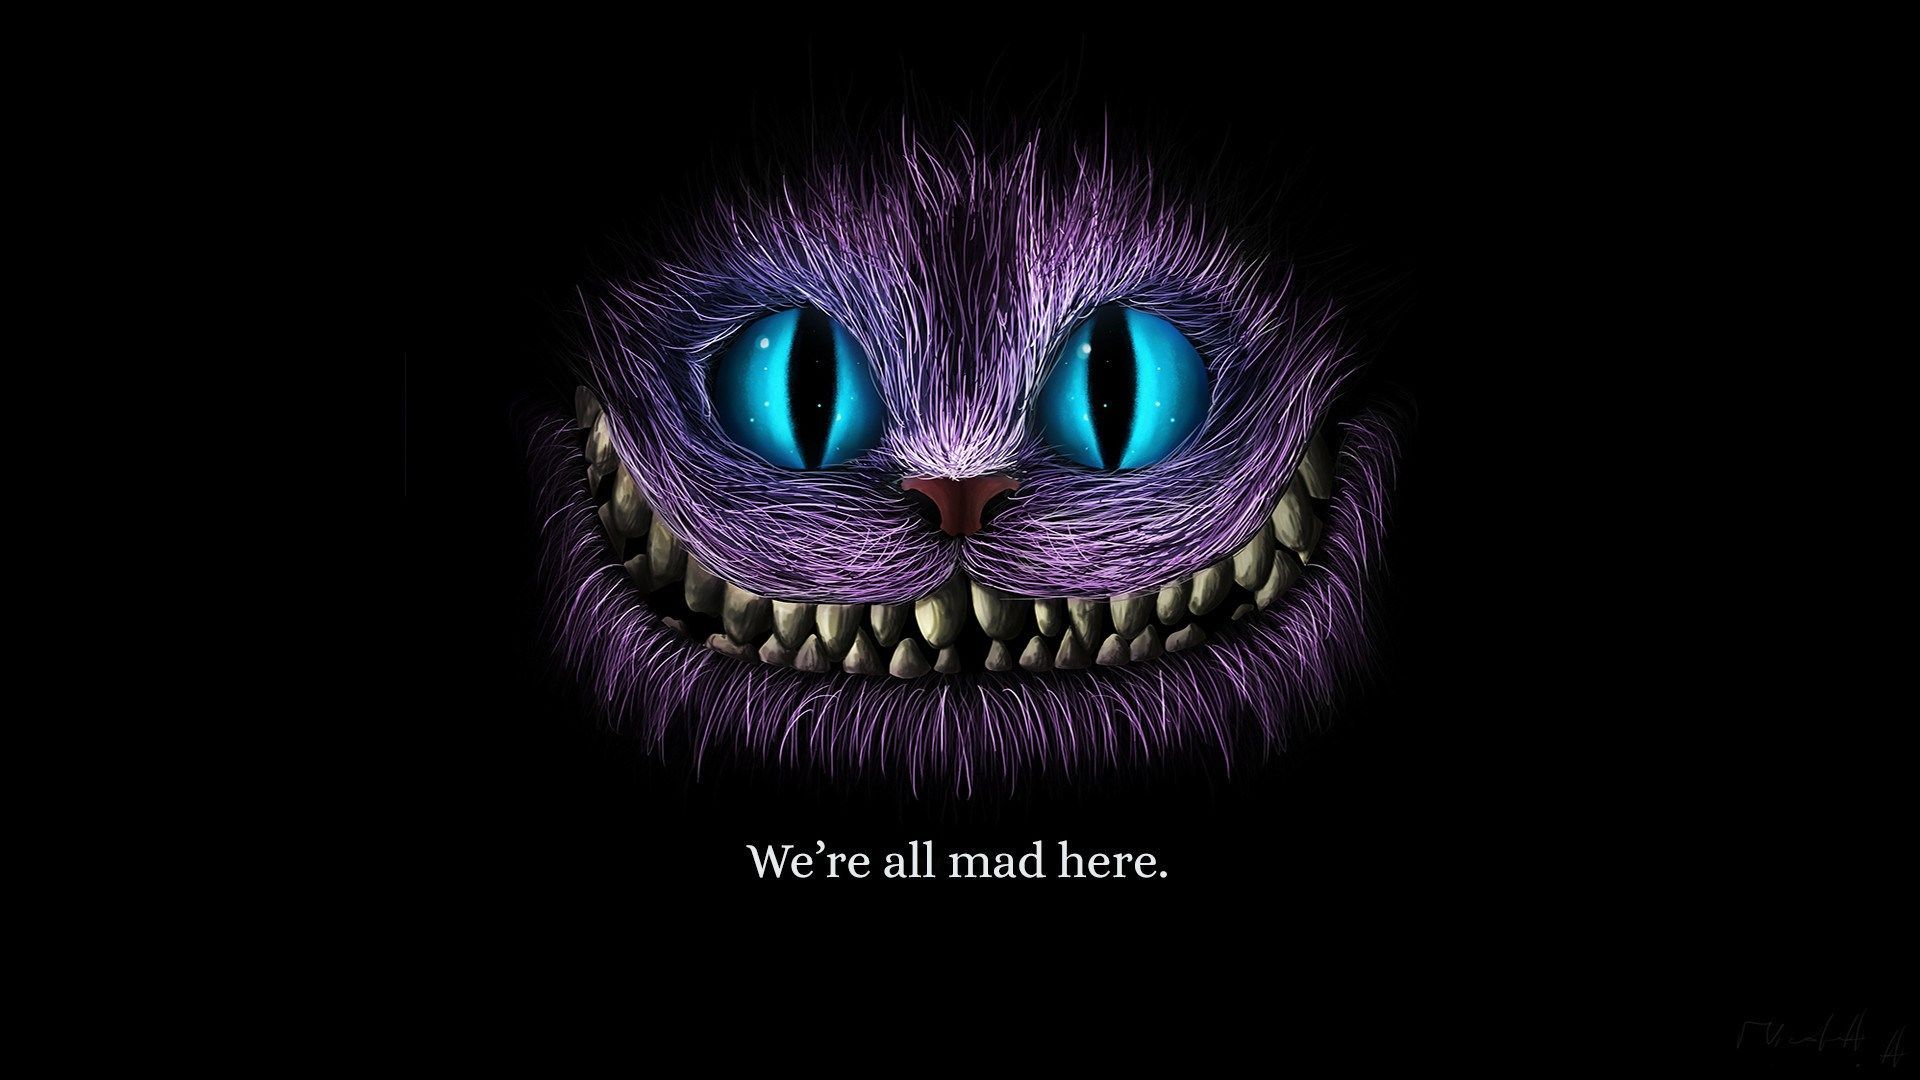 cheshire cat computer wallpaper background. Cheshire cat wallpaper, Cheshire cat, Alice in wonderland